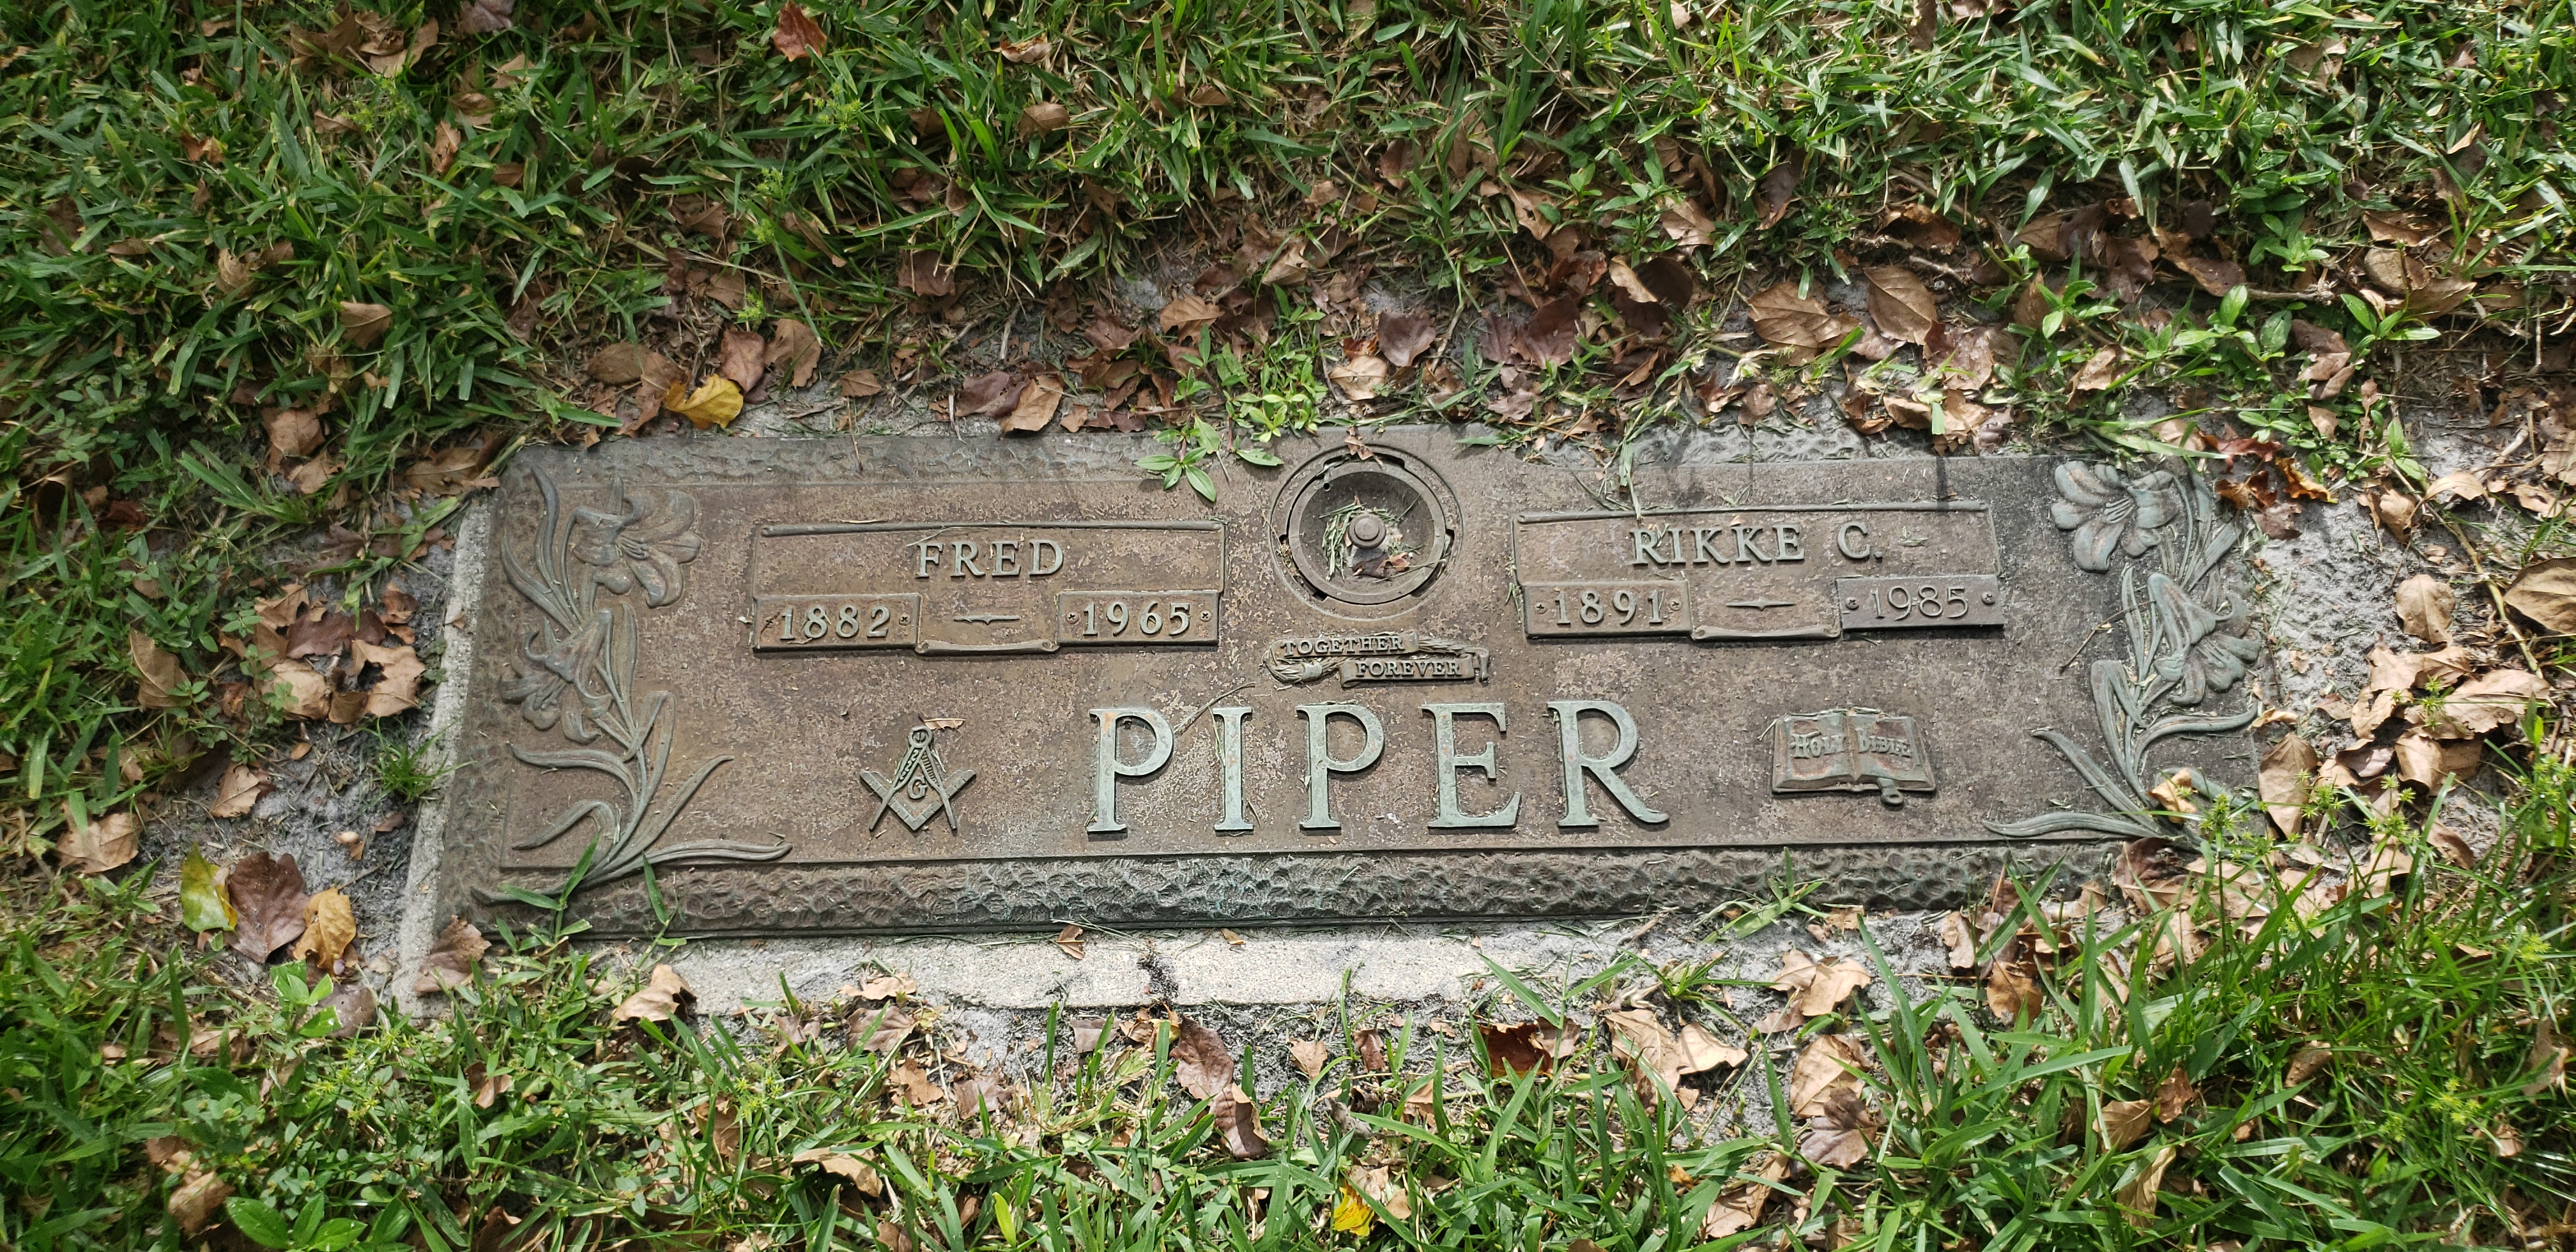 Fred Piper